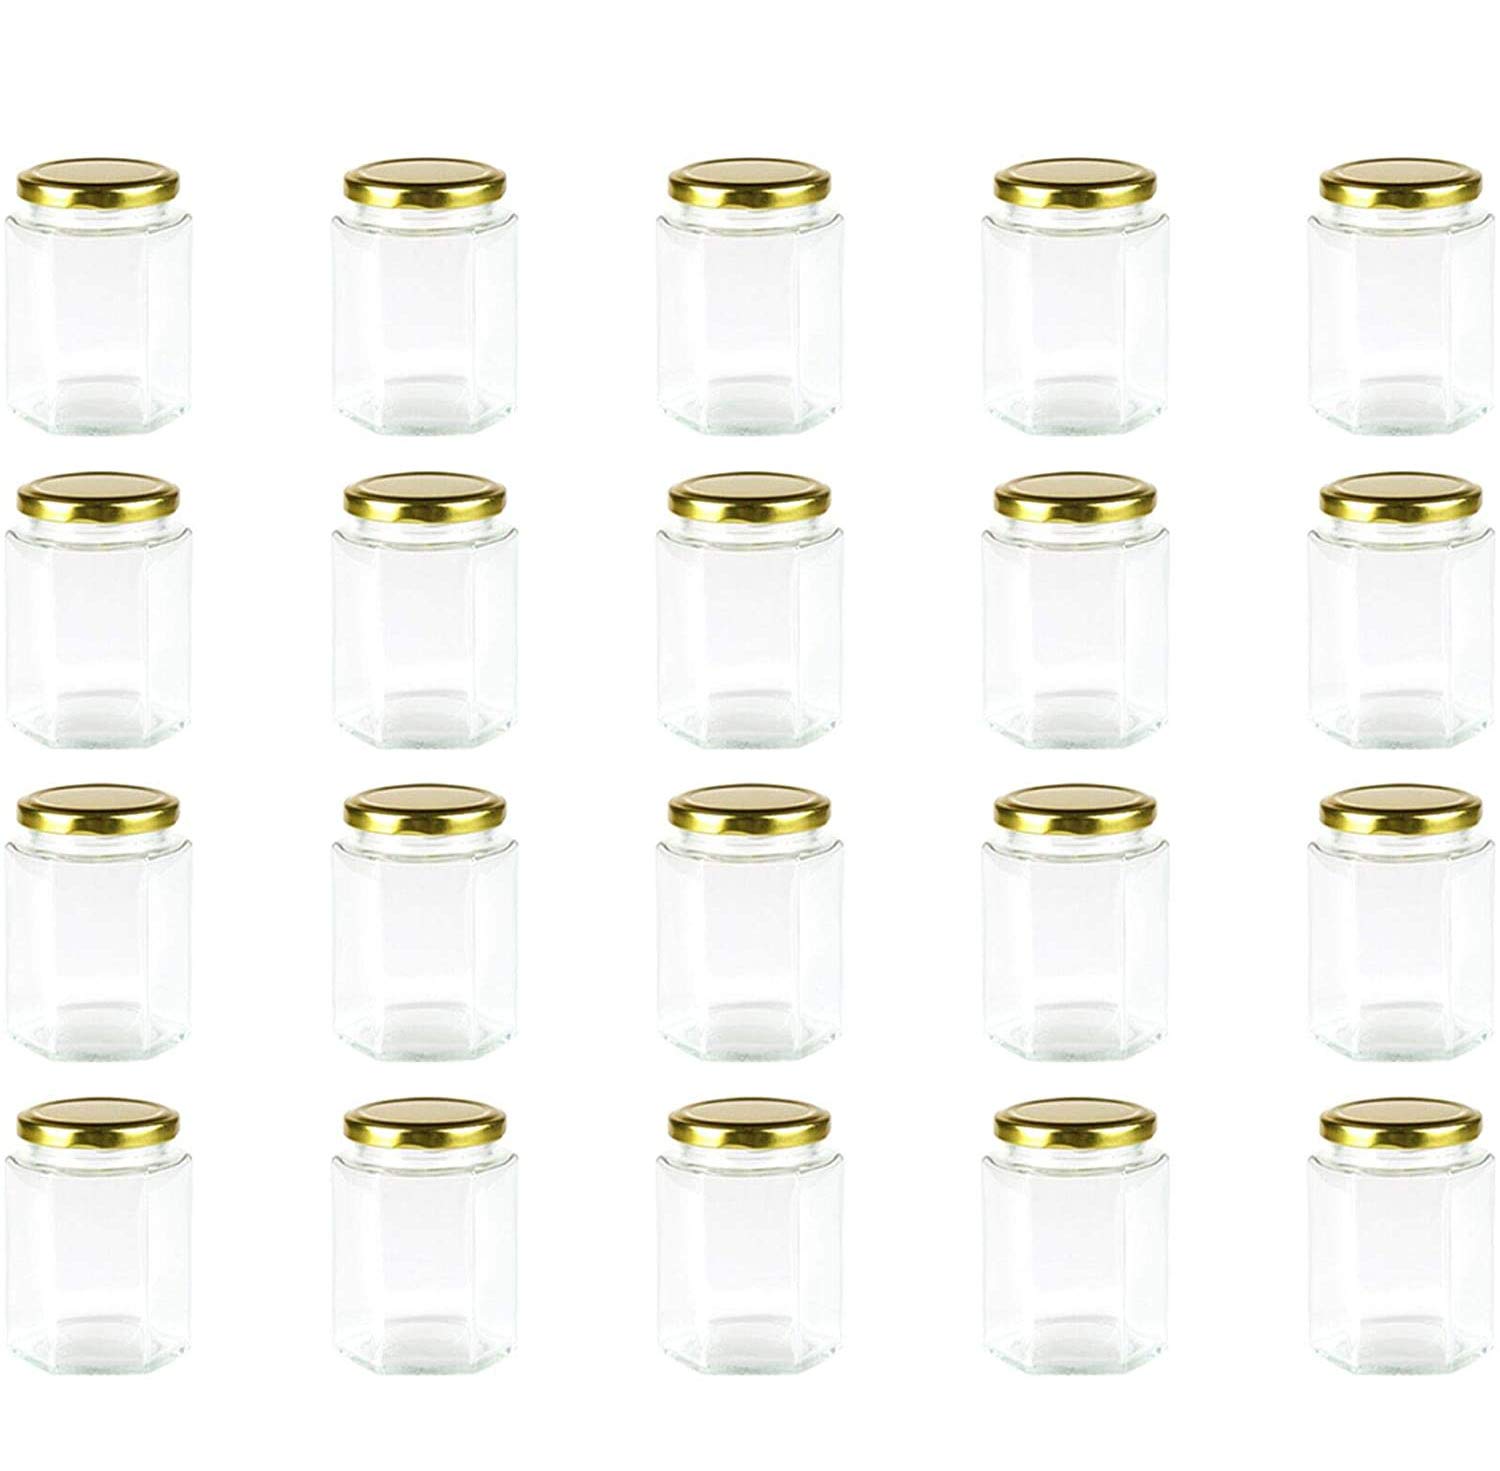 Encheng 10 oz Hexagon Jars,Clear Glass Jars With Lids(Golden),Mason Jars For Honey,Foods,Jams,Liquid,Herb Jars Spice Jars Canning Jars For Storage ...